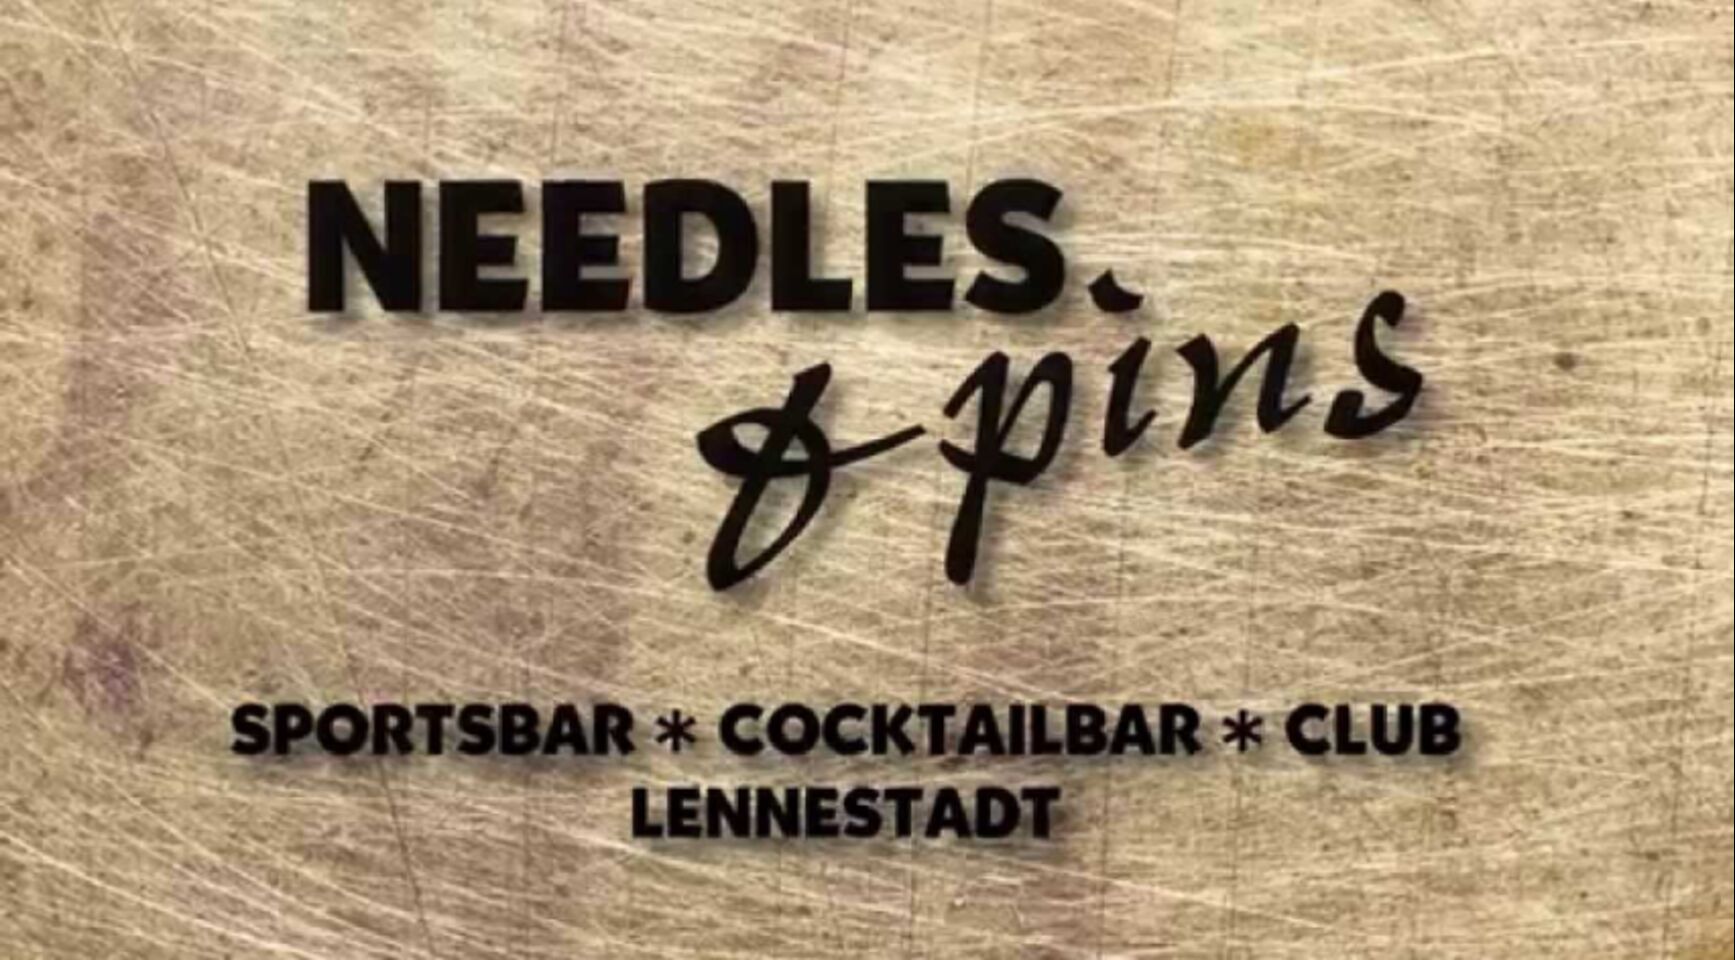 A photo of Needles & Pins